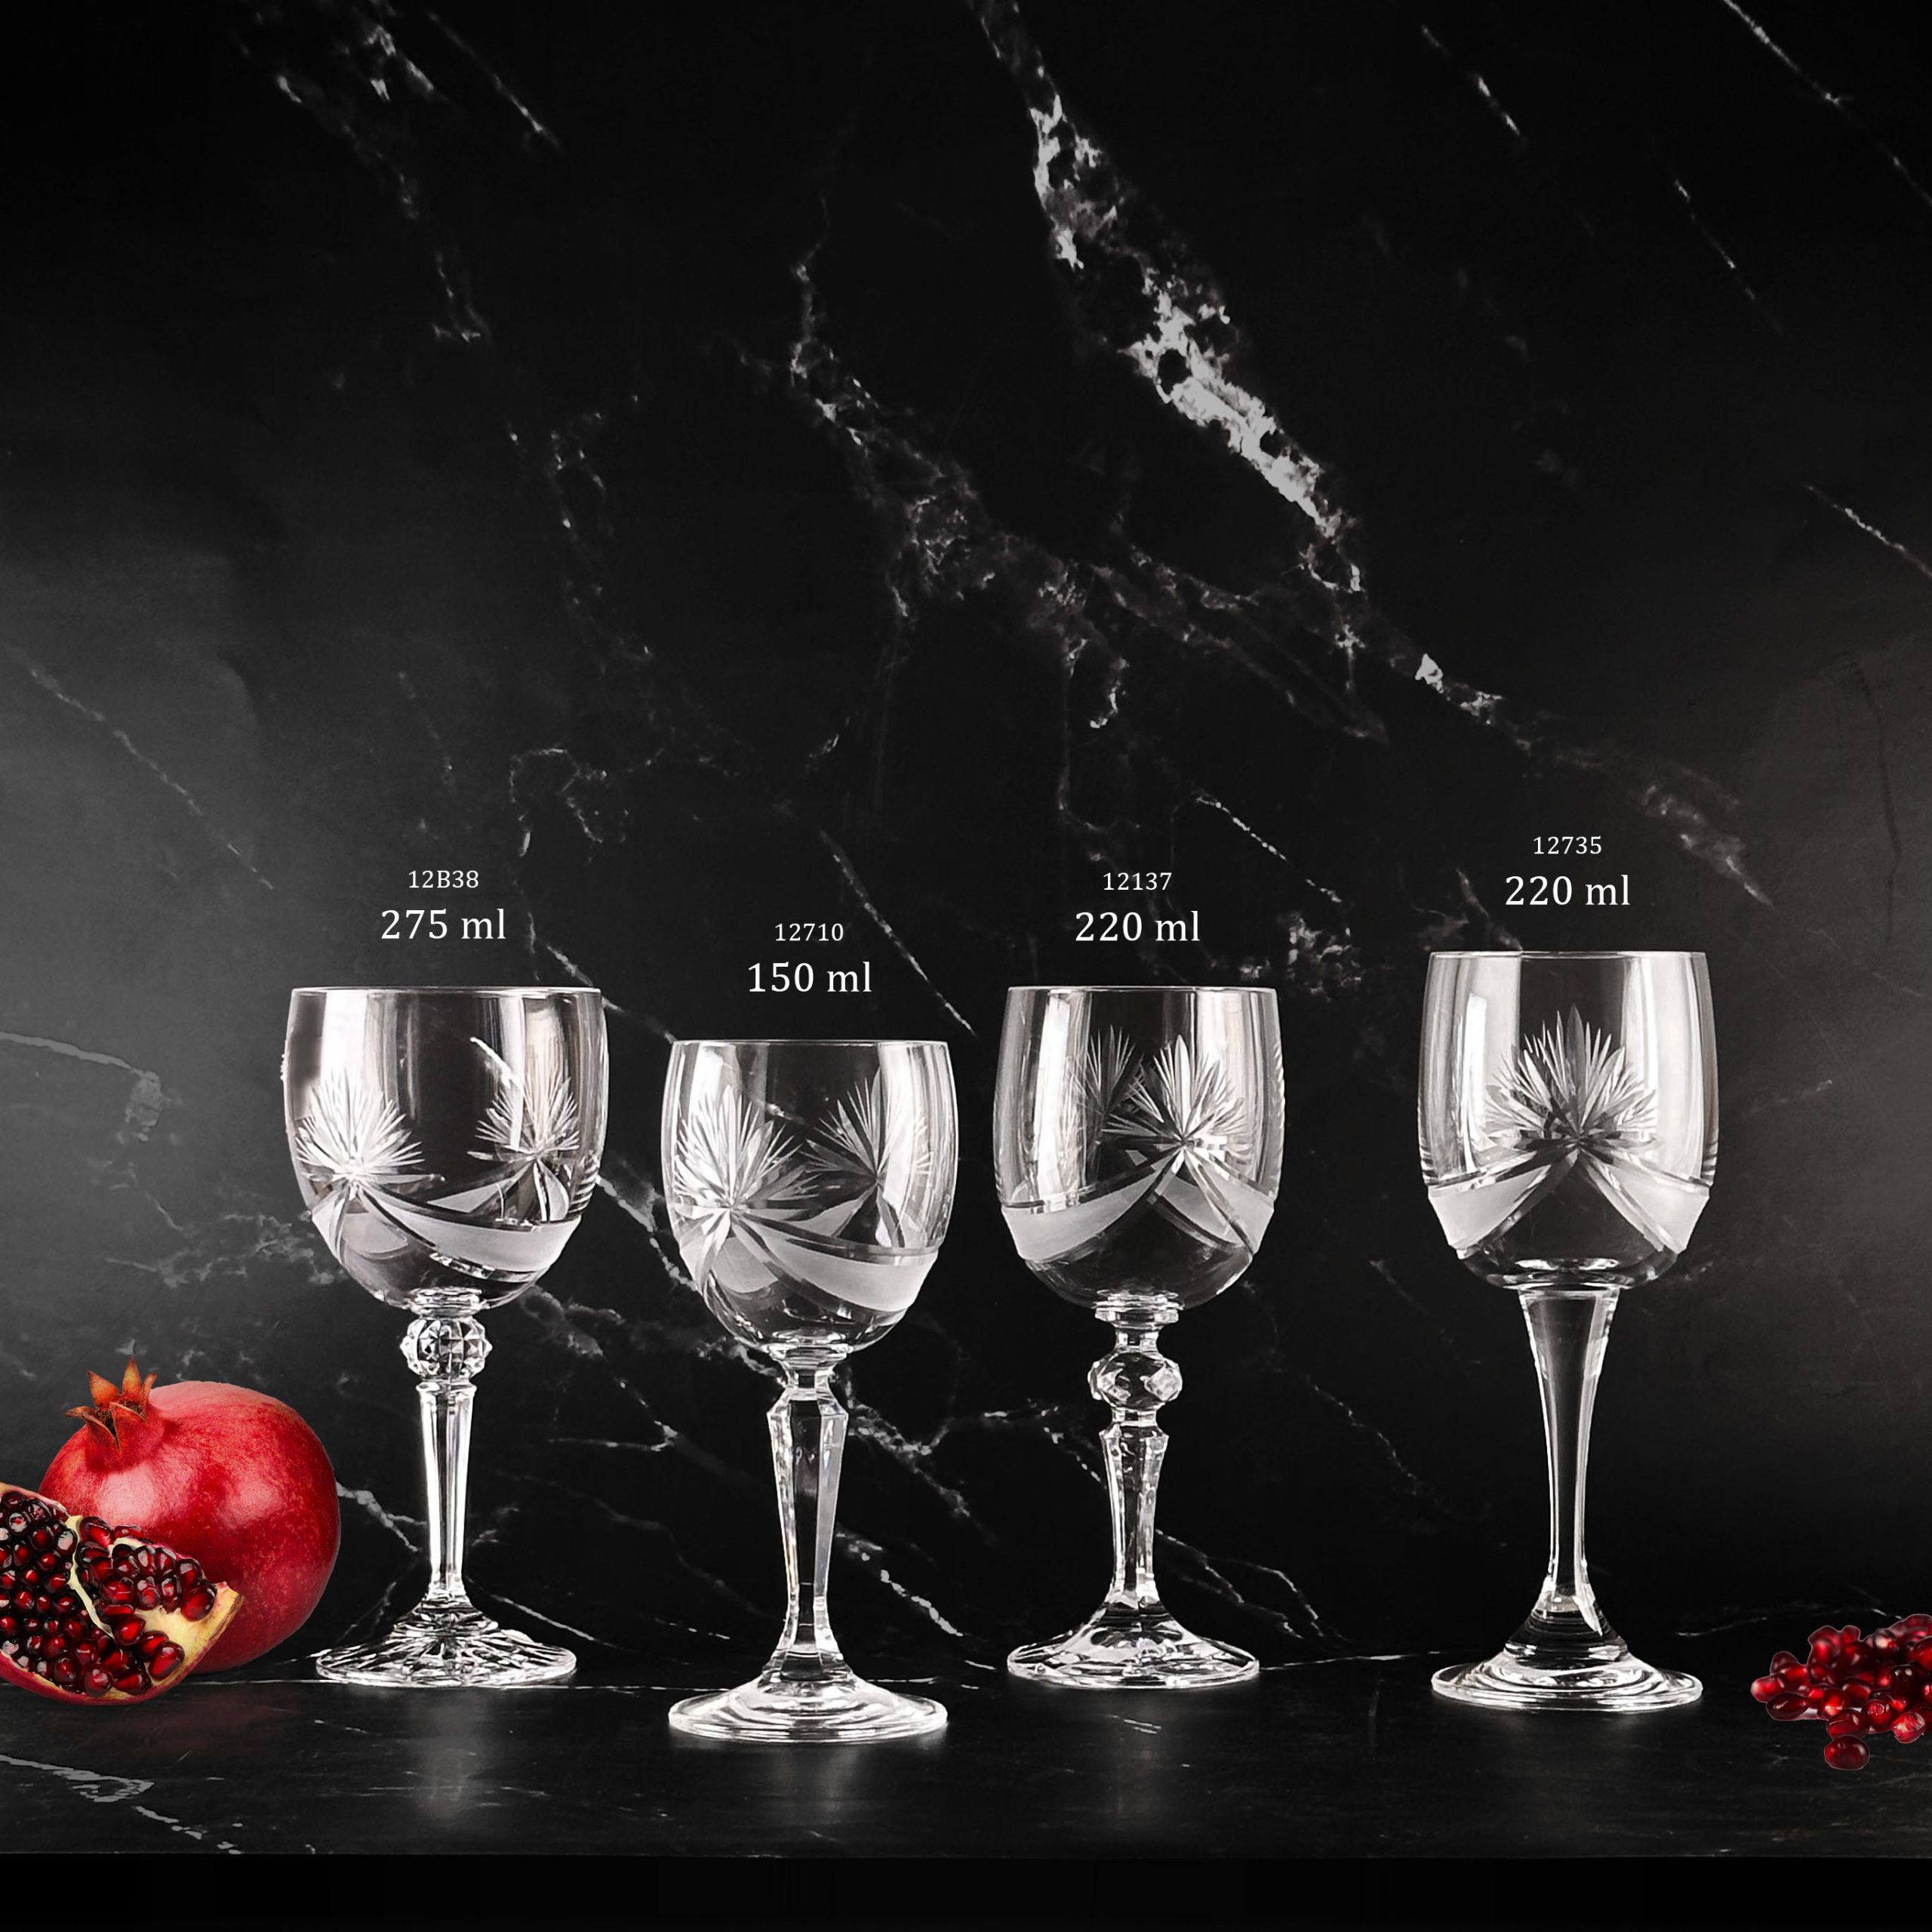 crystal wine glass 12710-12710-12B38-12735